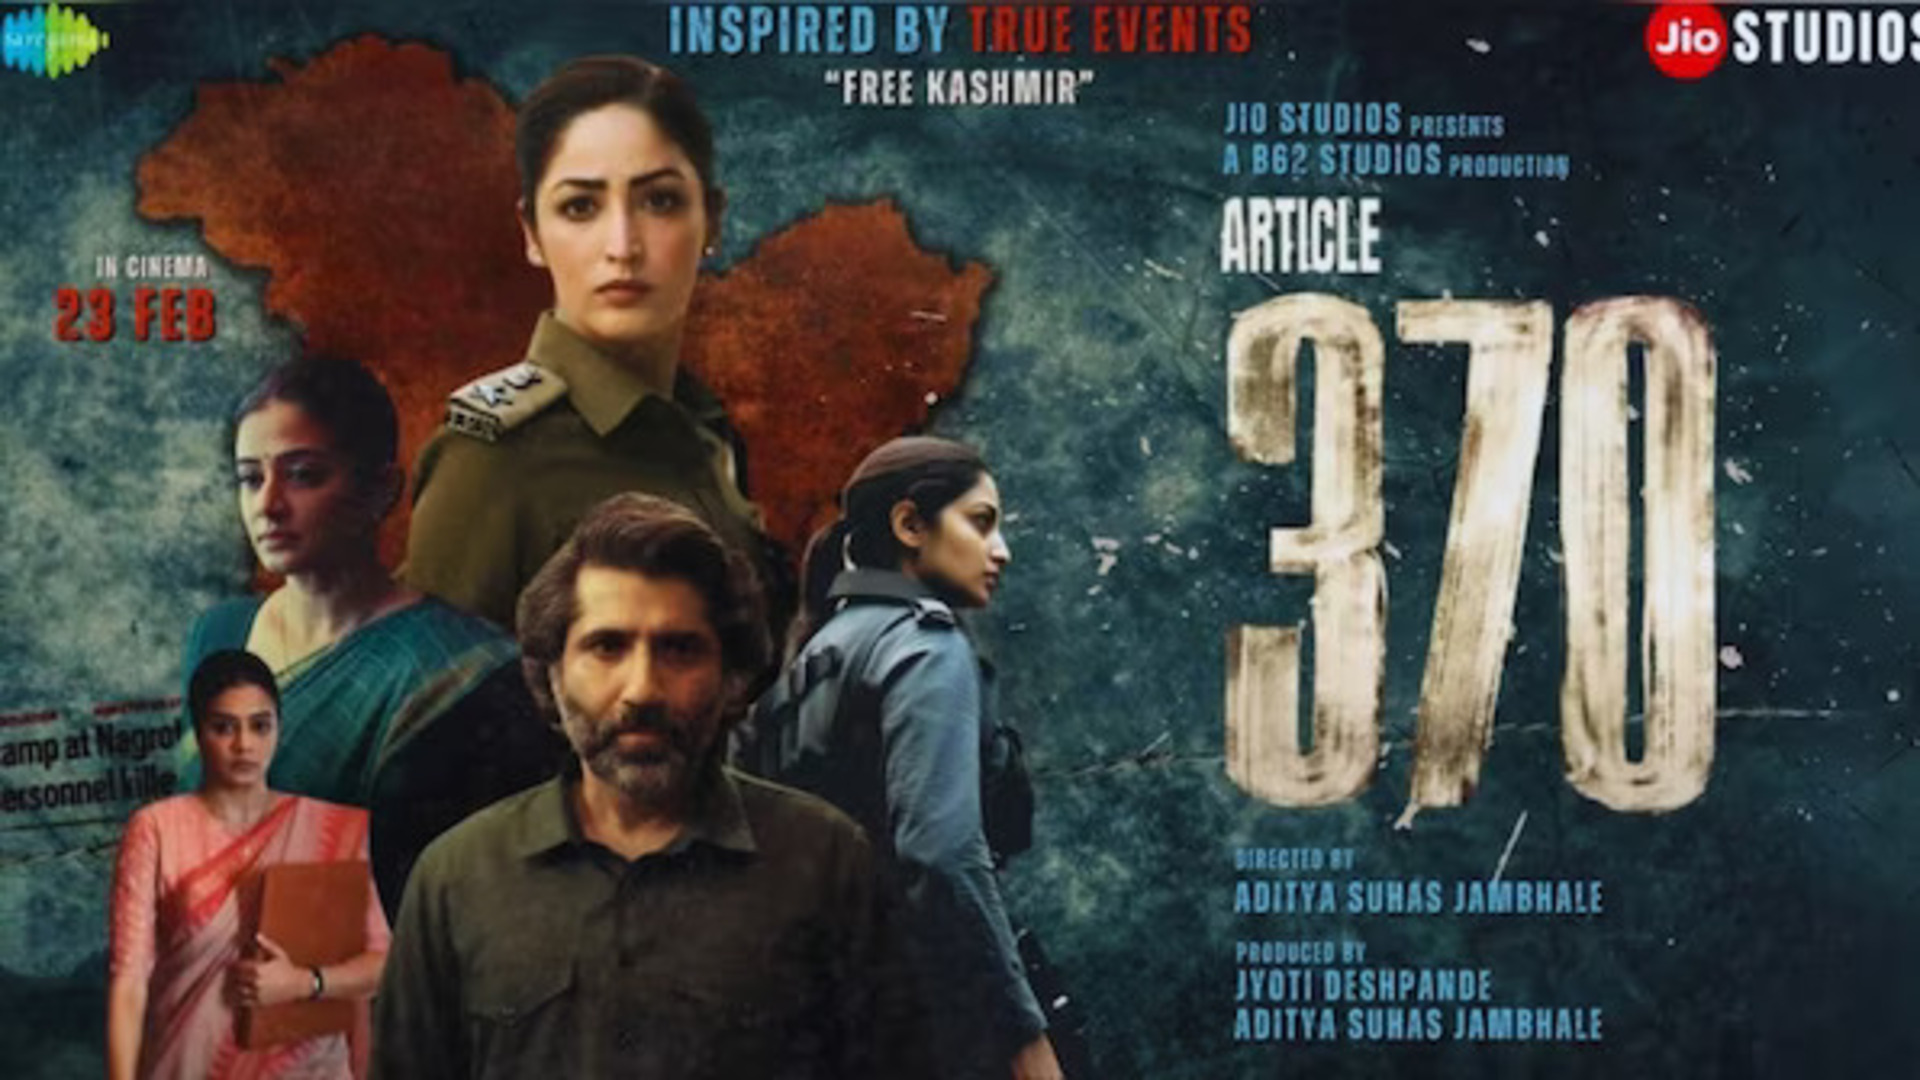 Article 370 box office collection 3 days: Yami Gautam film outperforms Crakk